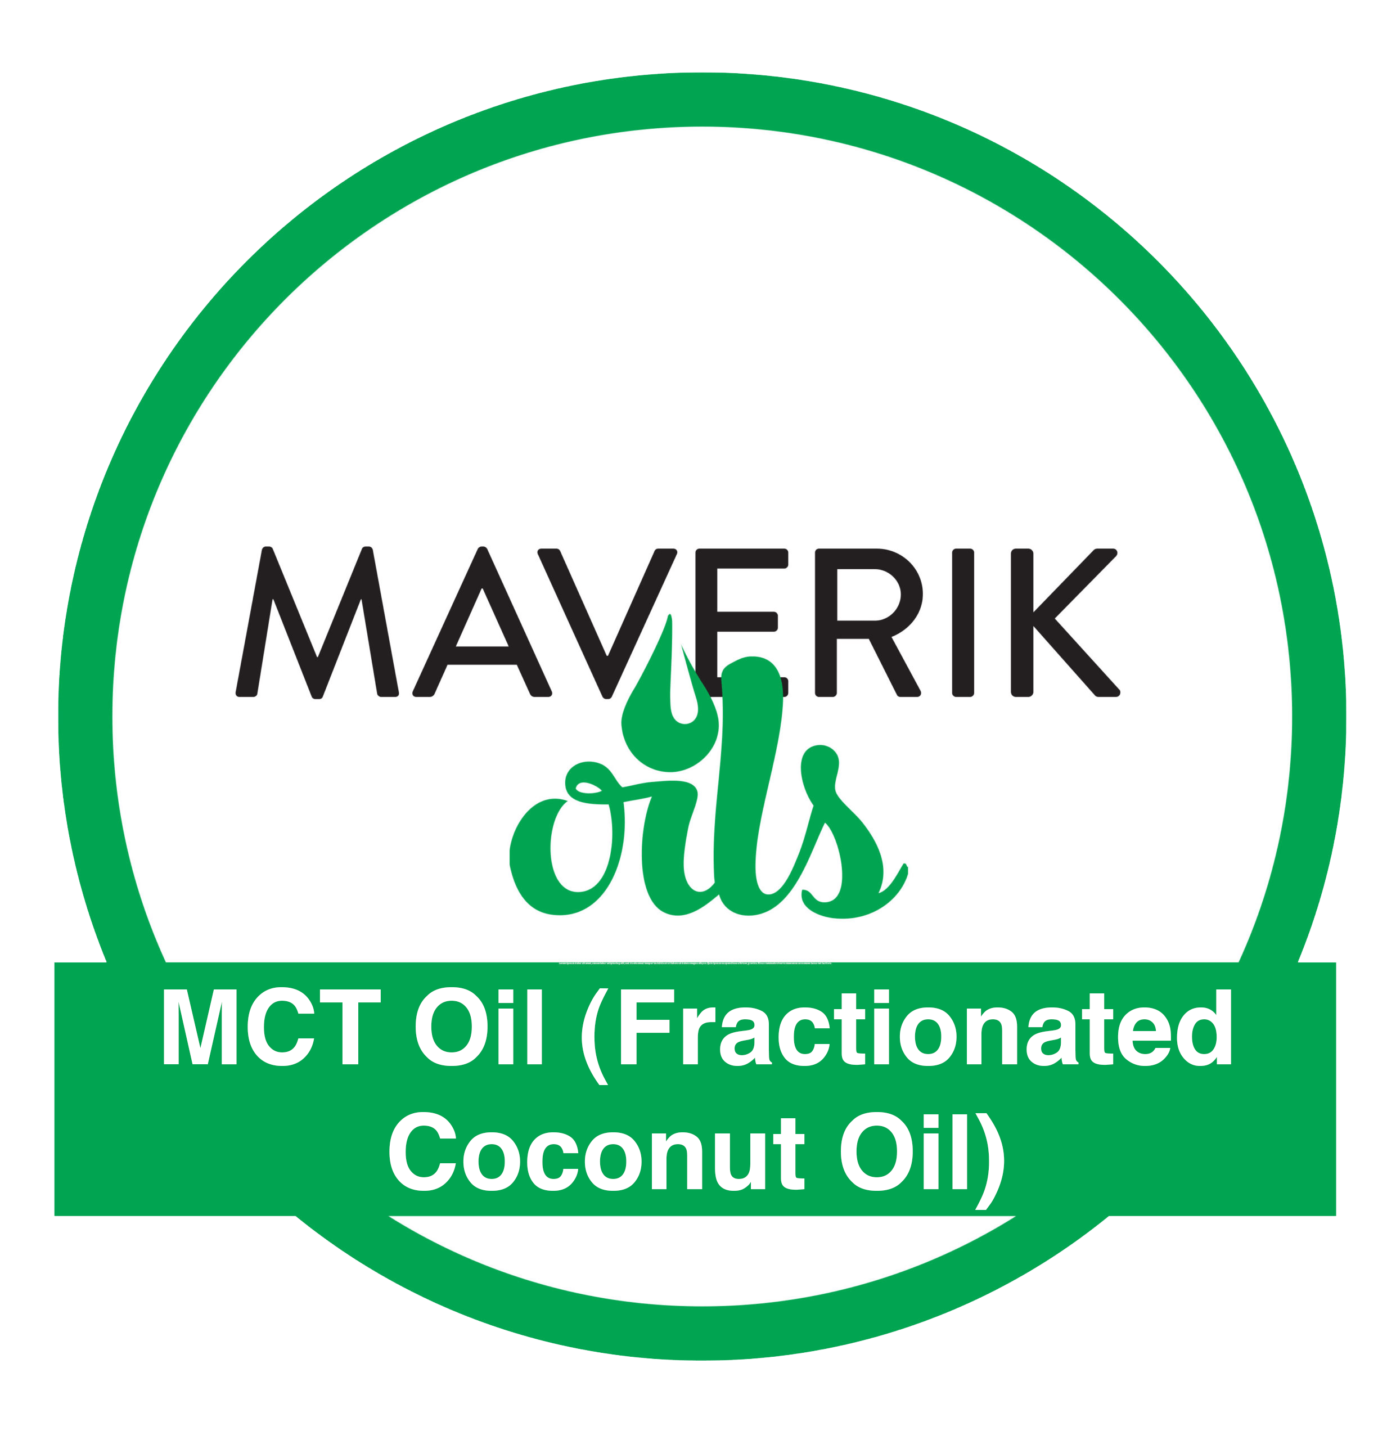 MCT Oil (Fractionated Coconut Oil)